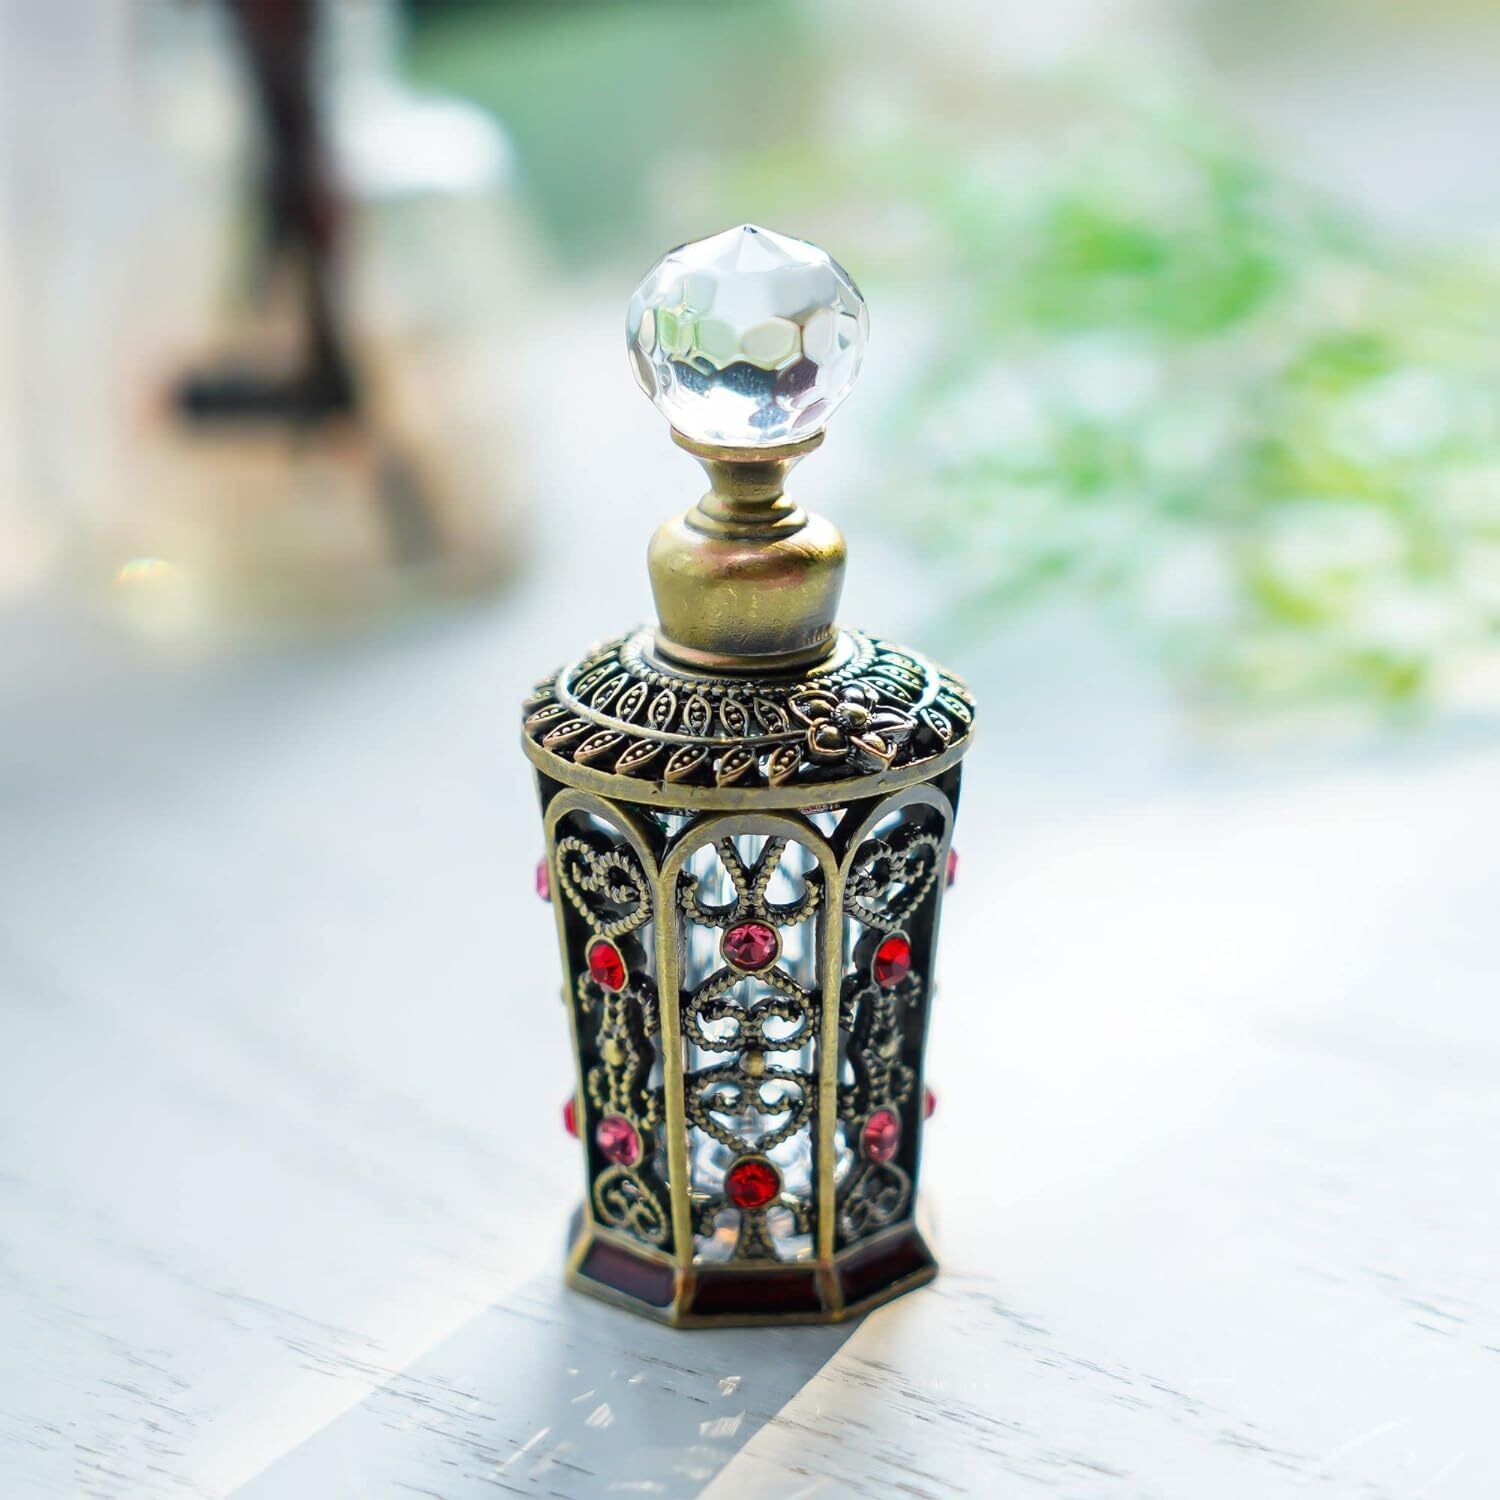 Antique Glass Perfume Bottles EmptyVintageJeweledDecorative CrystalPerfume(10ml)